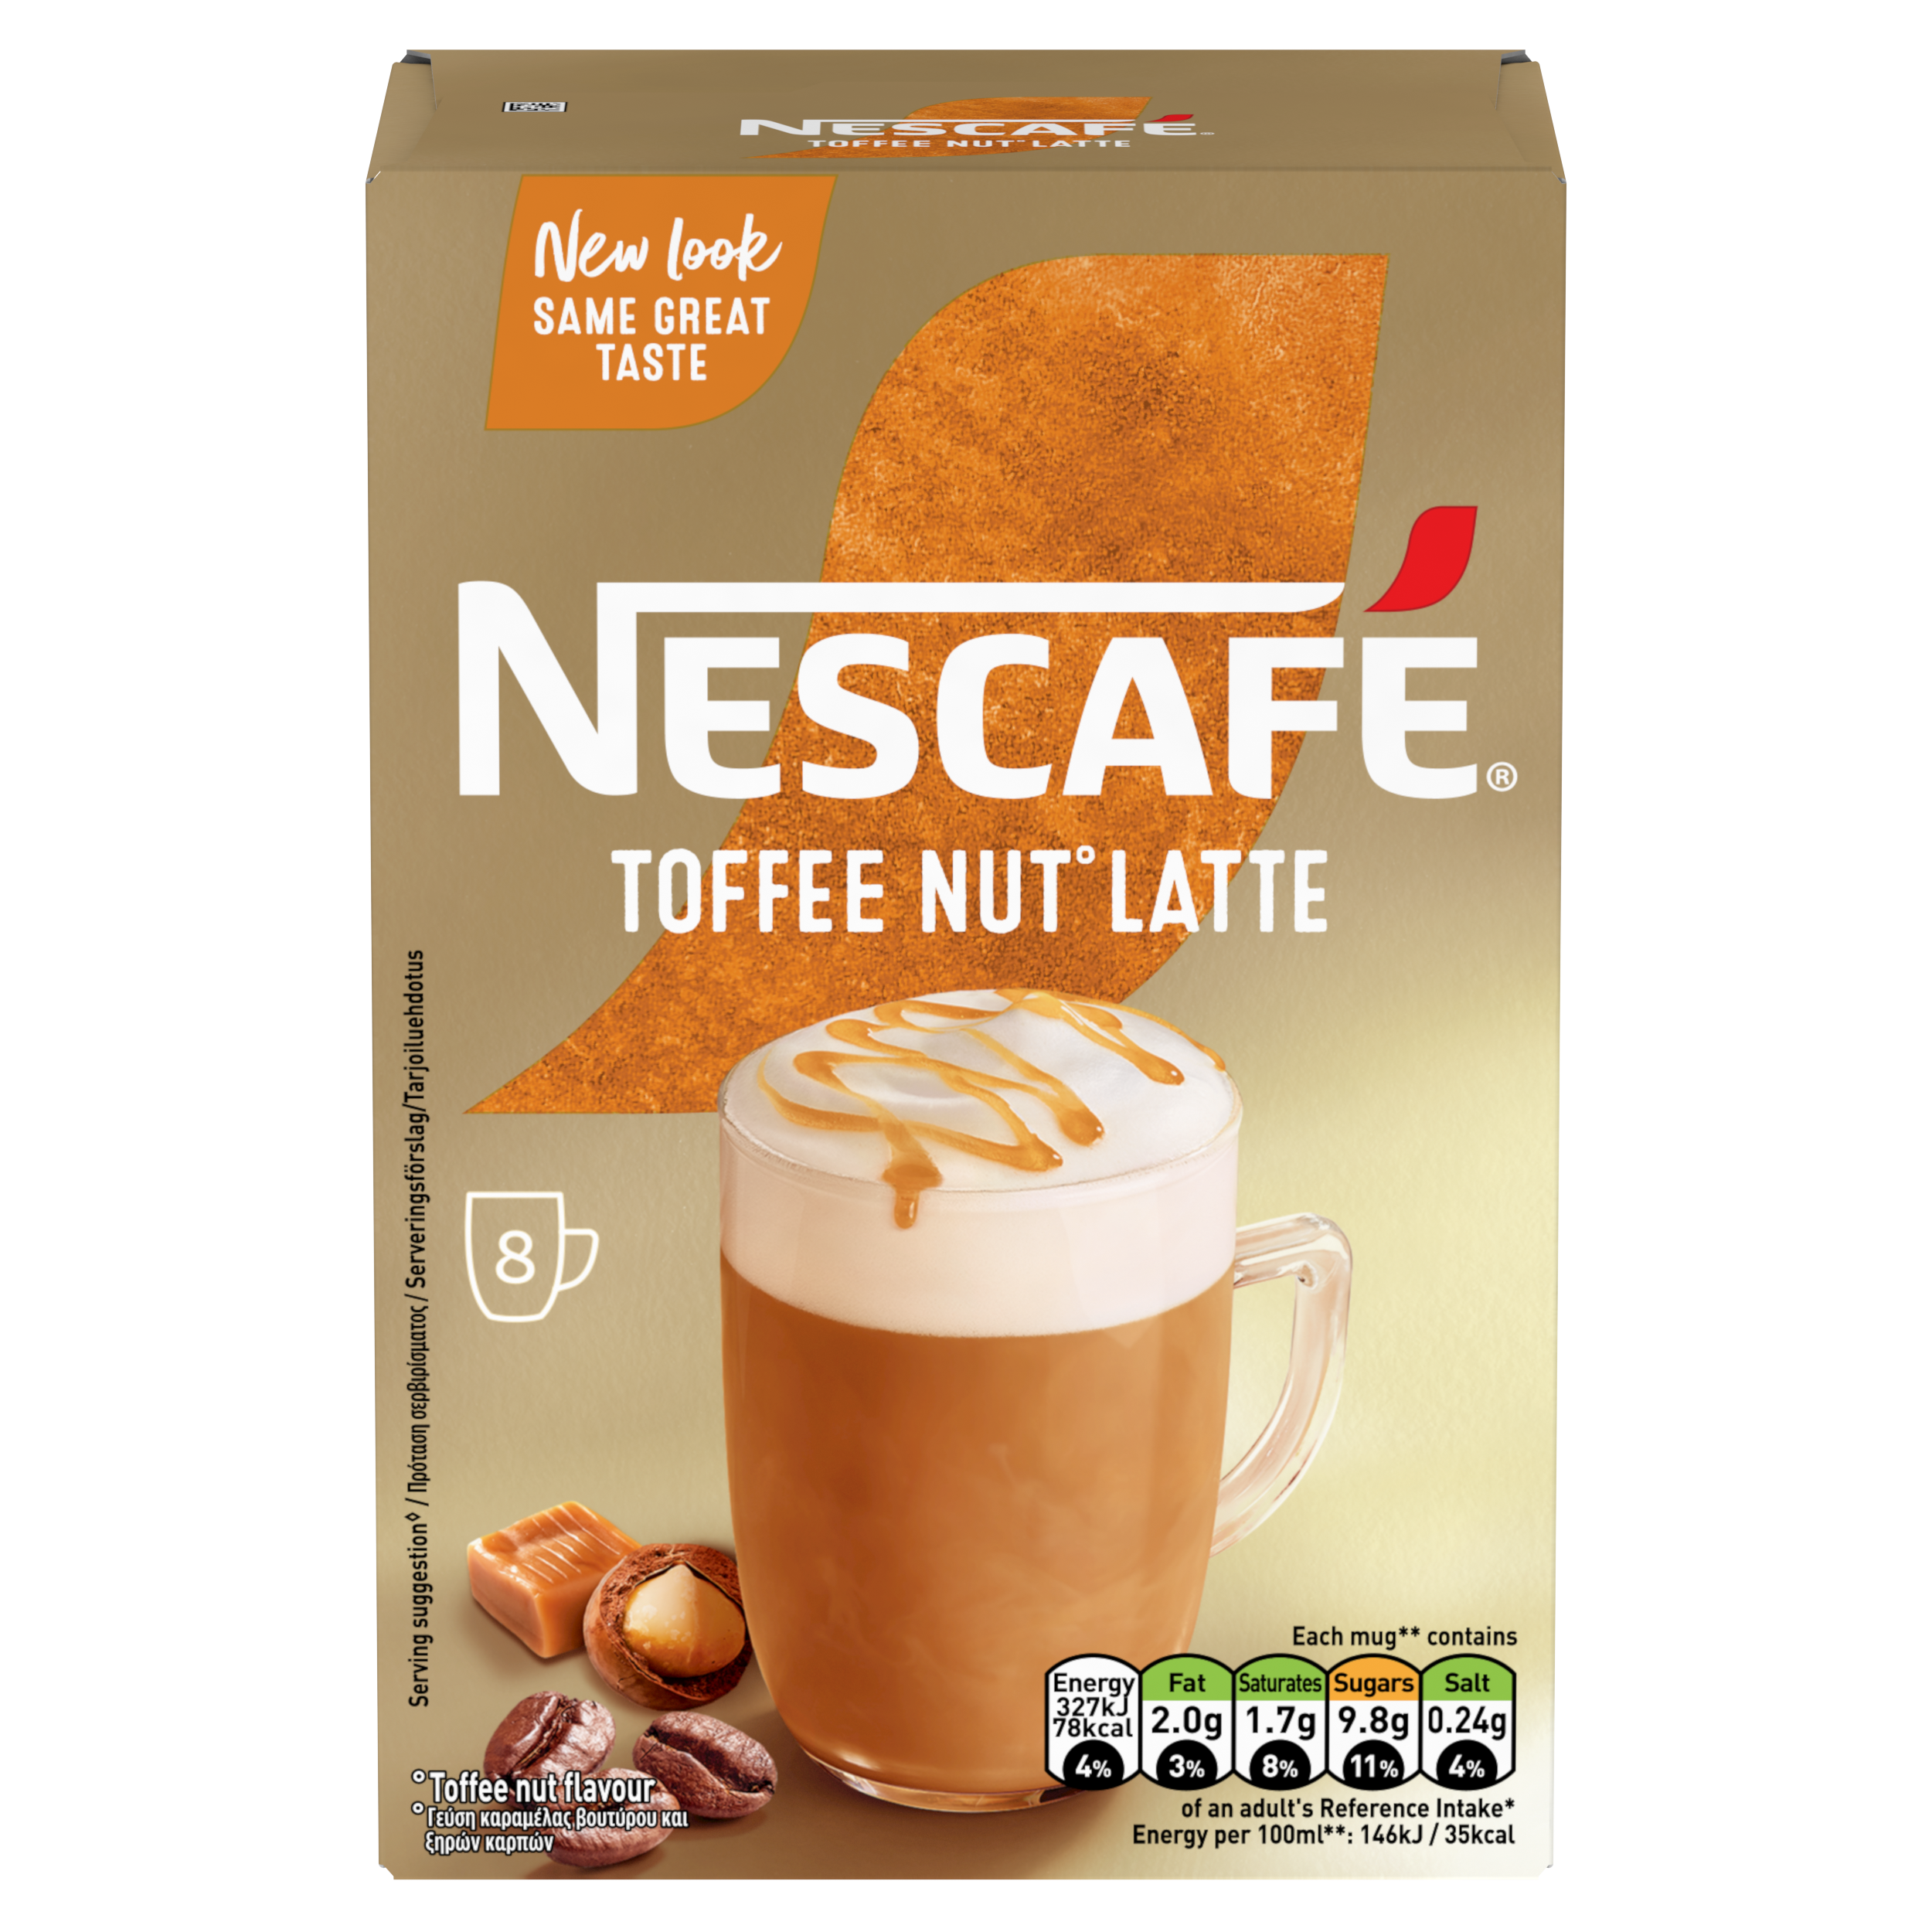 Toffee Nut Latte